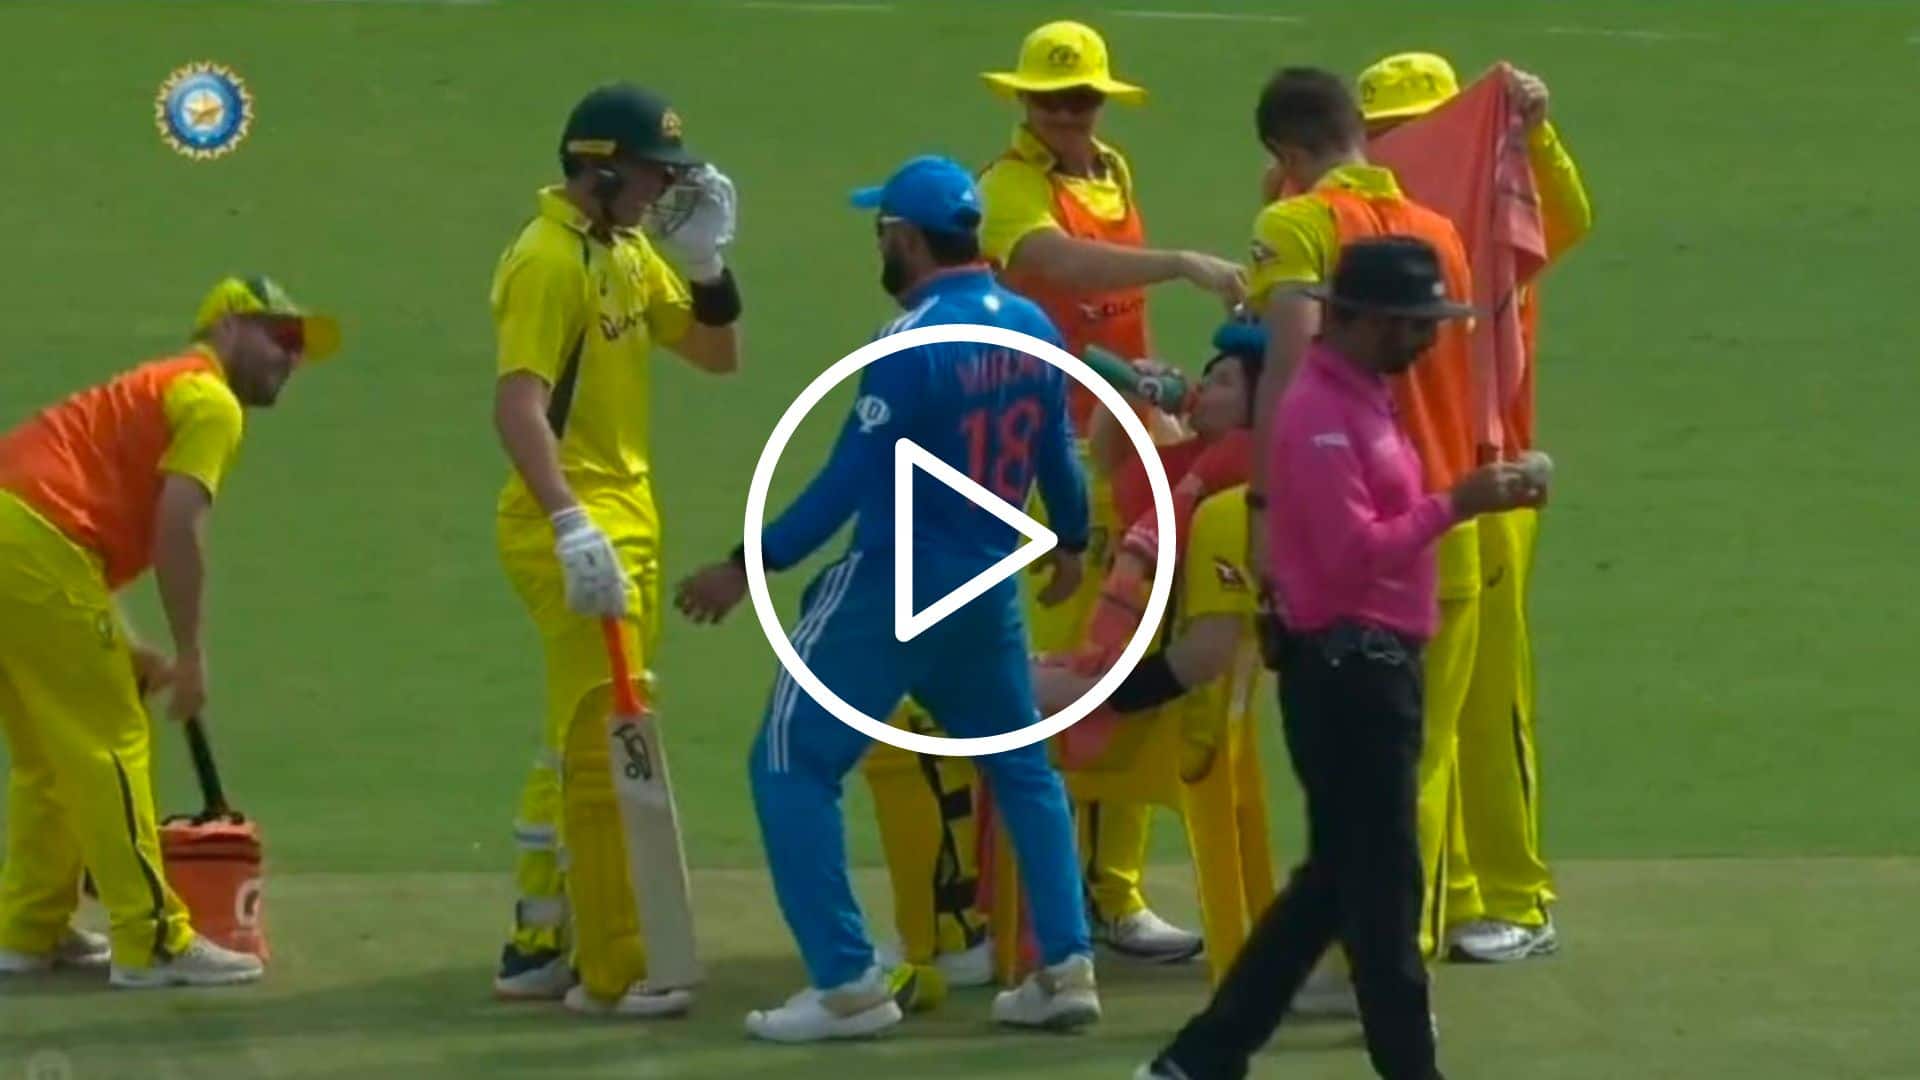 [Watch] Virat Kohli Teases Labuschagne With A Dance In Third IND vs AUS ODI